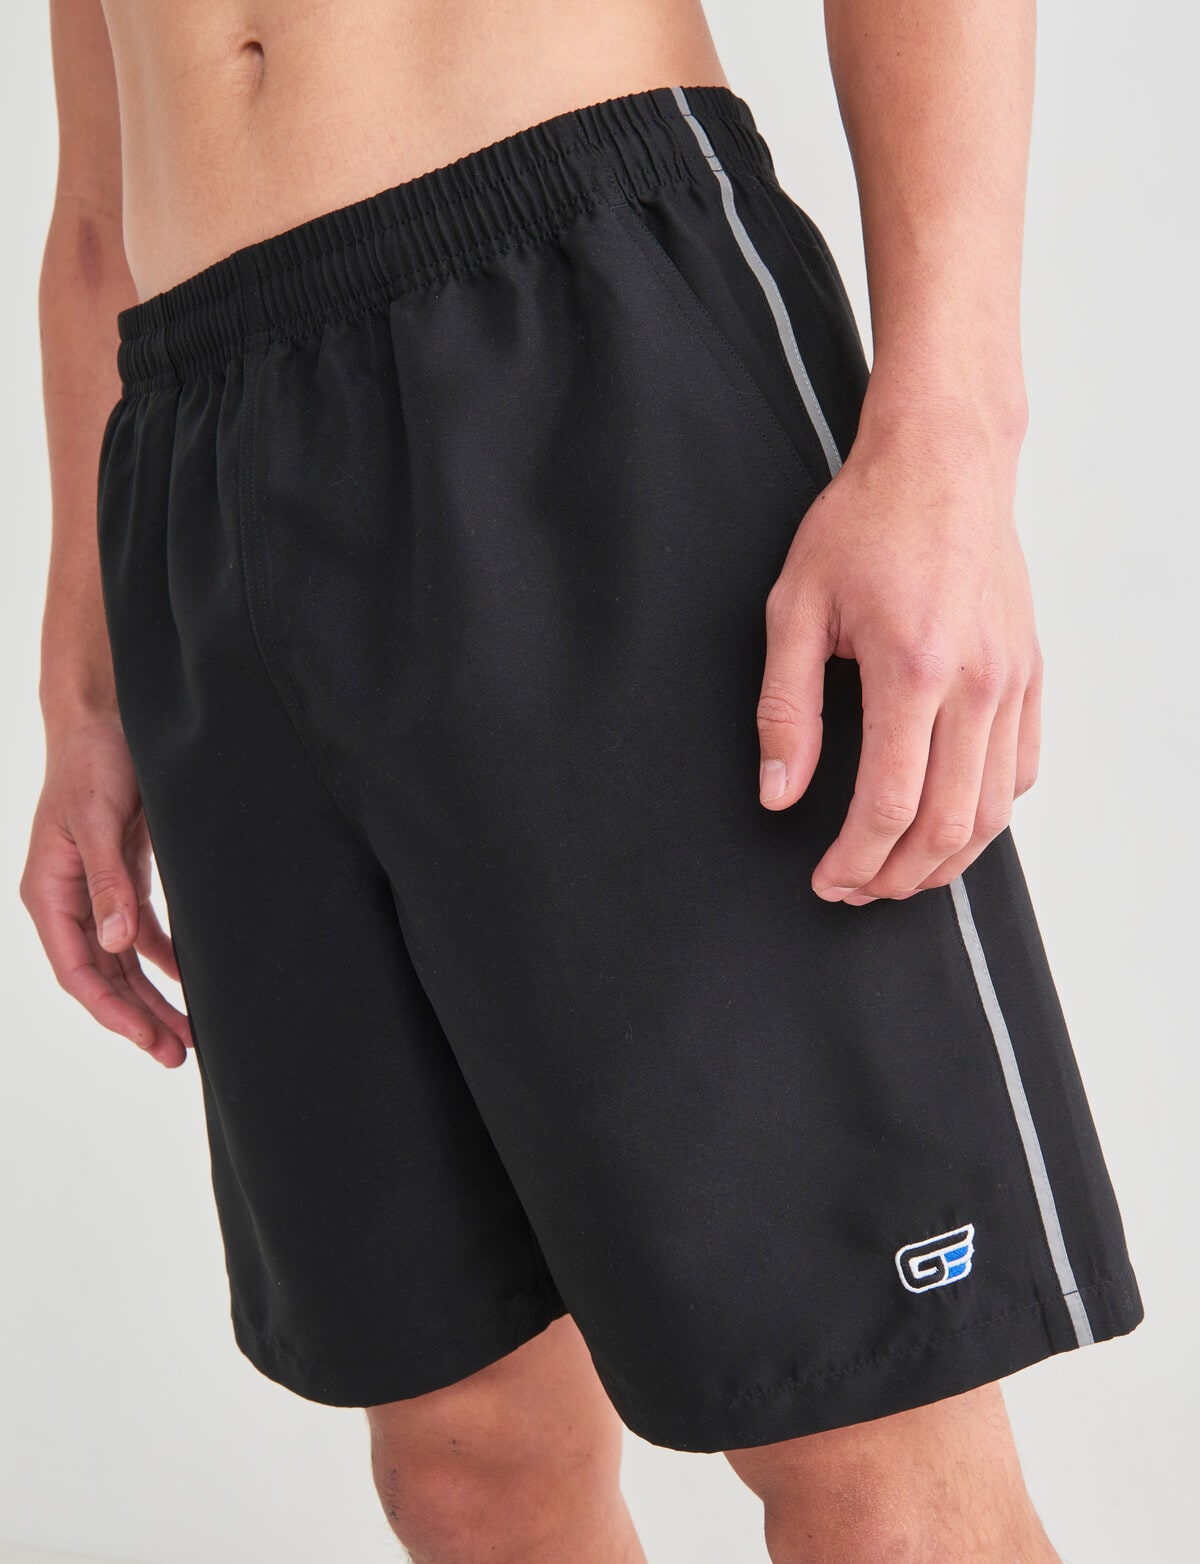 JEsilunmaMY Plus Size Mid Waist Boxer Briefs for Men Stretch Cotton Moisture -Wicking Underwear Soft Comfortable Pouch Trunks, Black-1pc, Large :  : Clothing, Shoes & Accessories